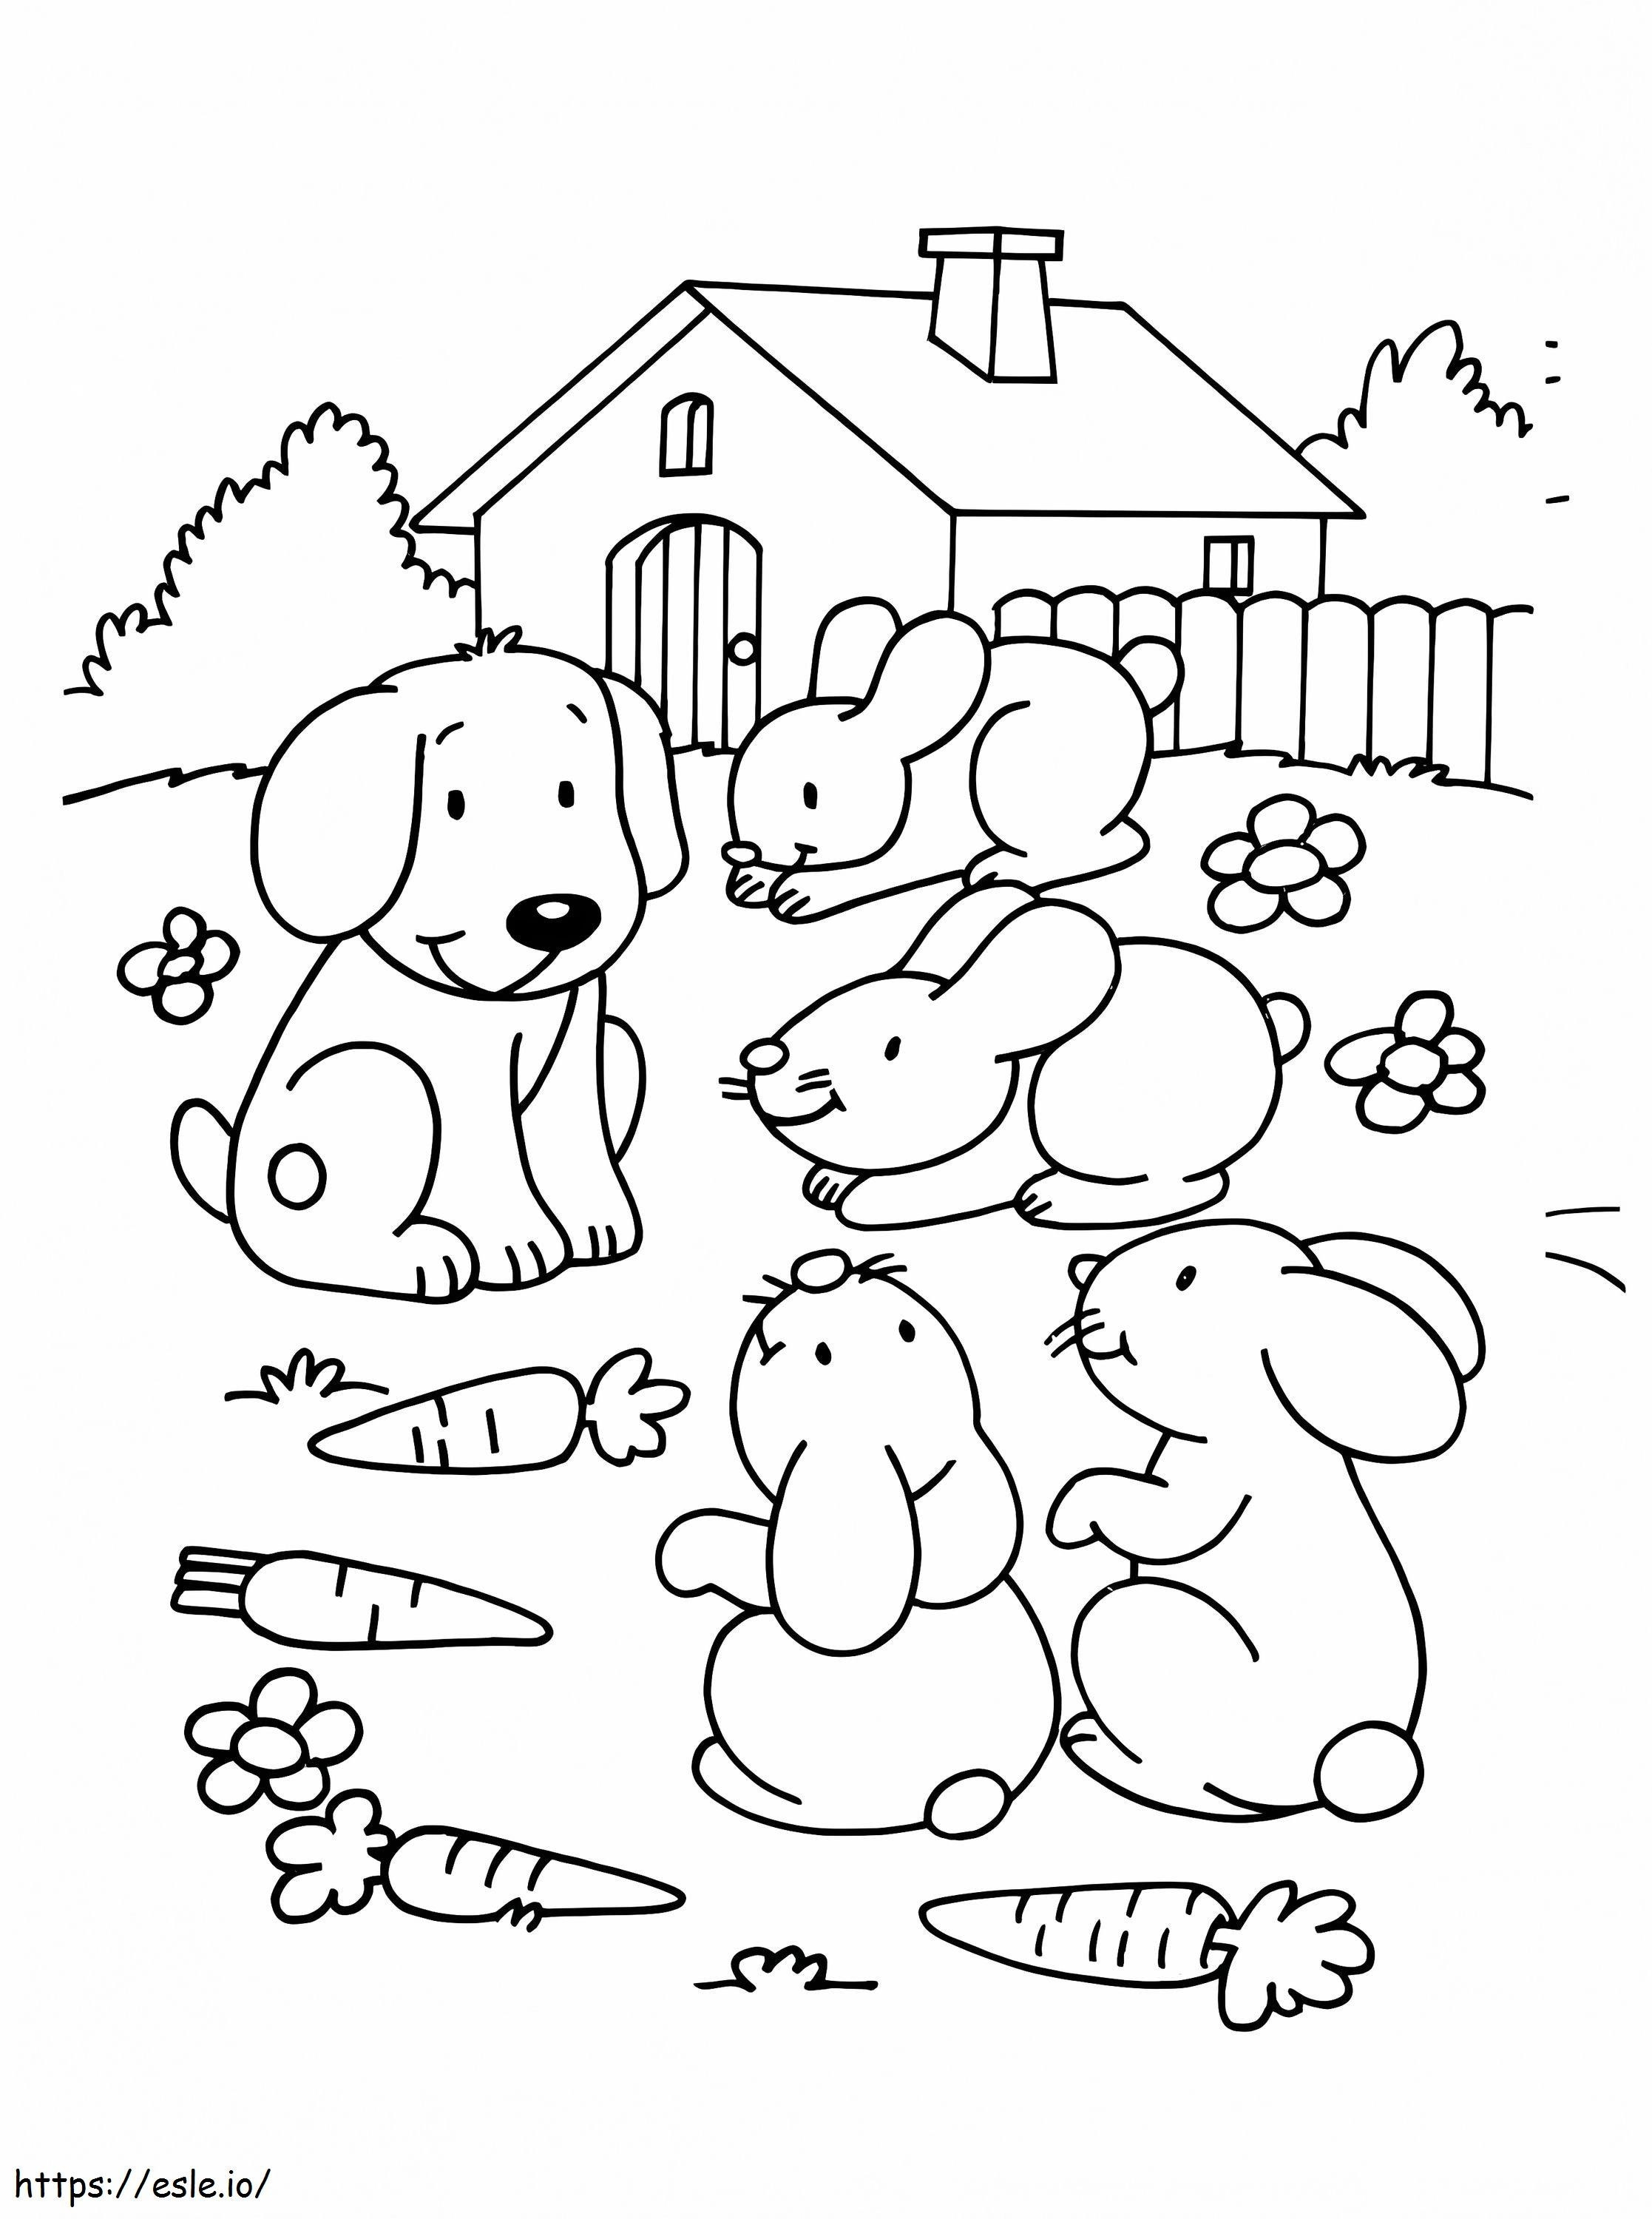 Pets Dog And Rabits coloring page